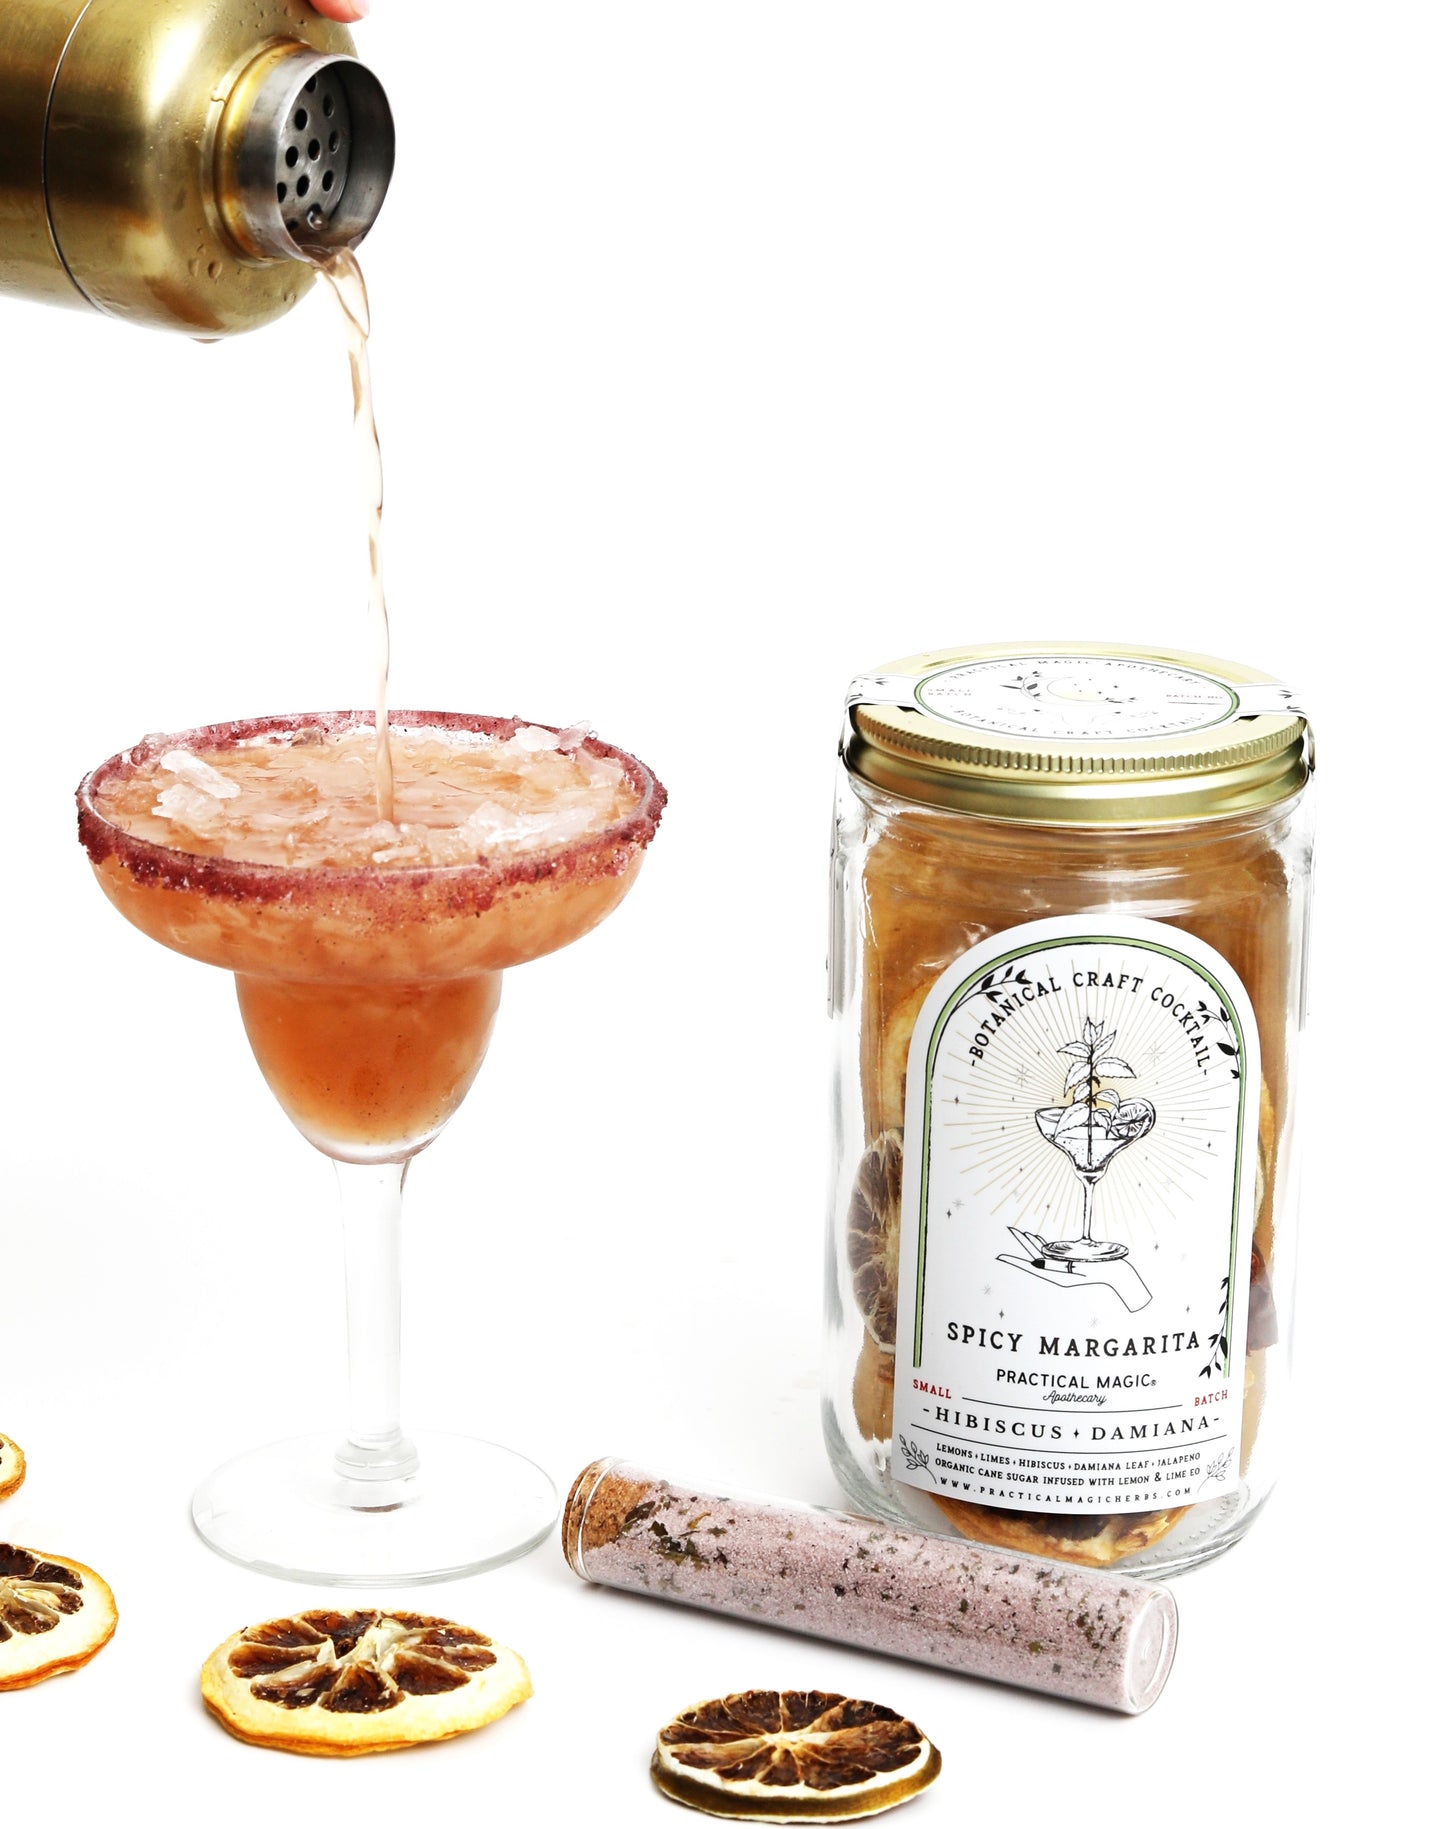 Spicy Margarita w/ Hibiscus & Damiana Craft Cocktail